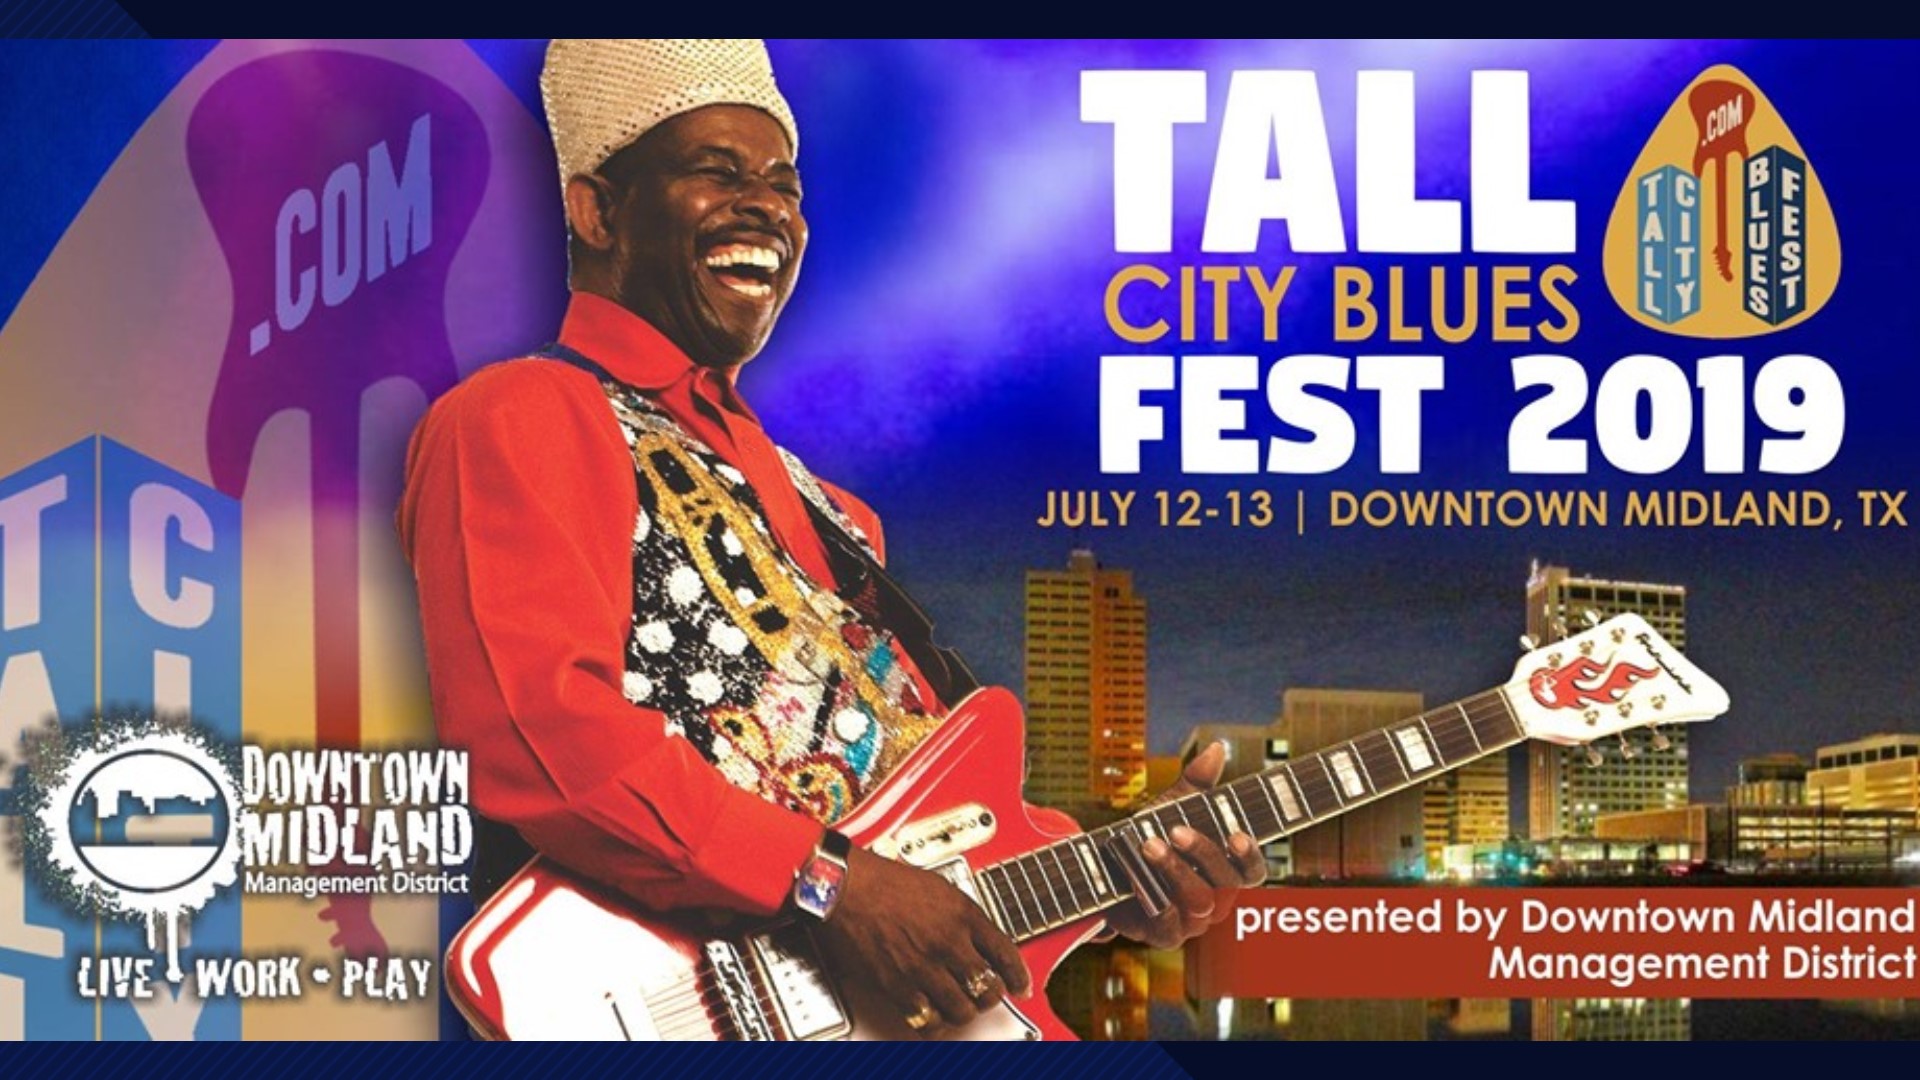 Tall City Blues Fest returns to Midland